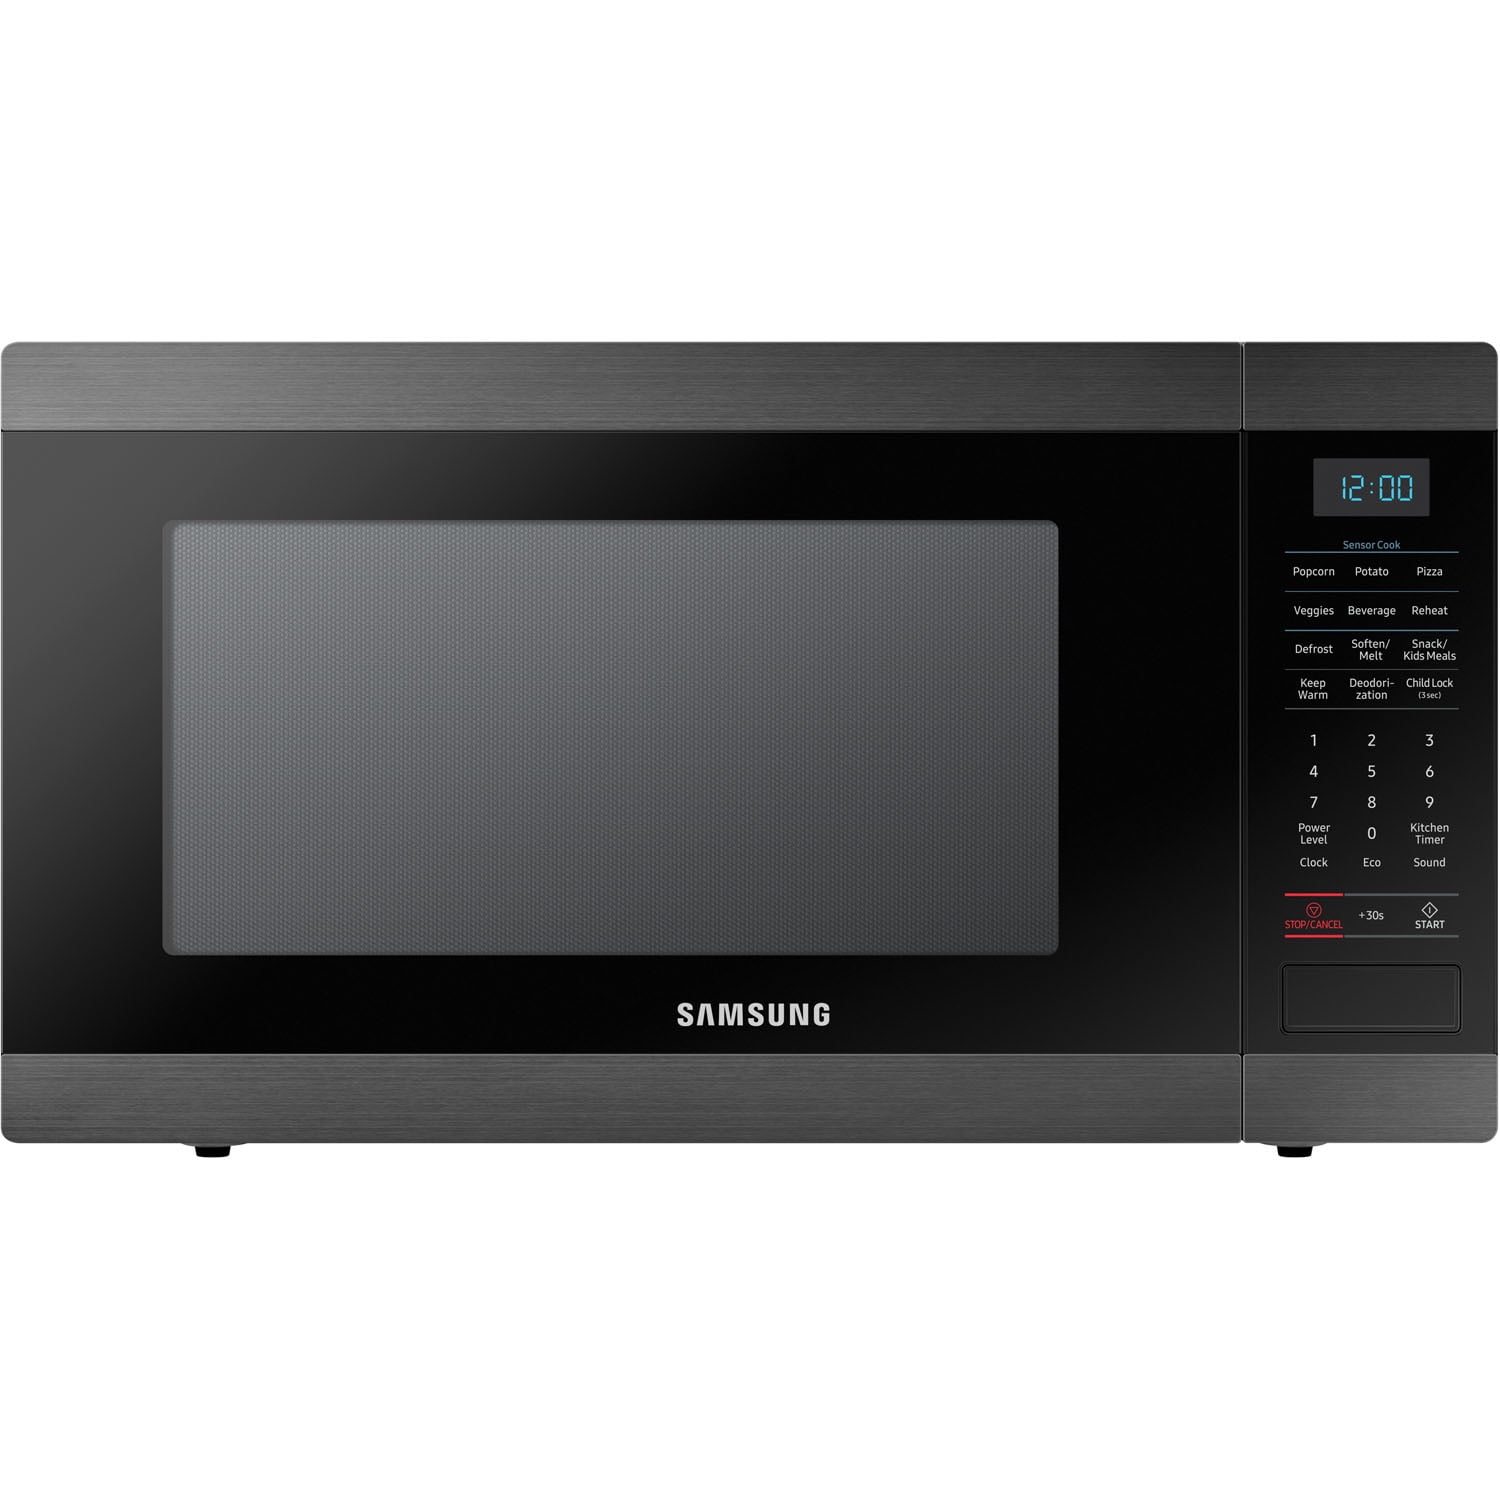 Samsung 1.9 cu. ft. Large Capacity Countertop Microwave - Black